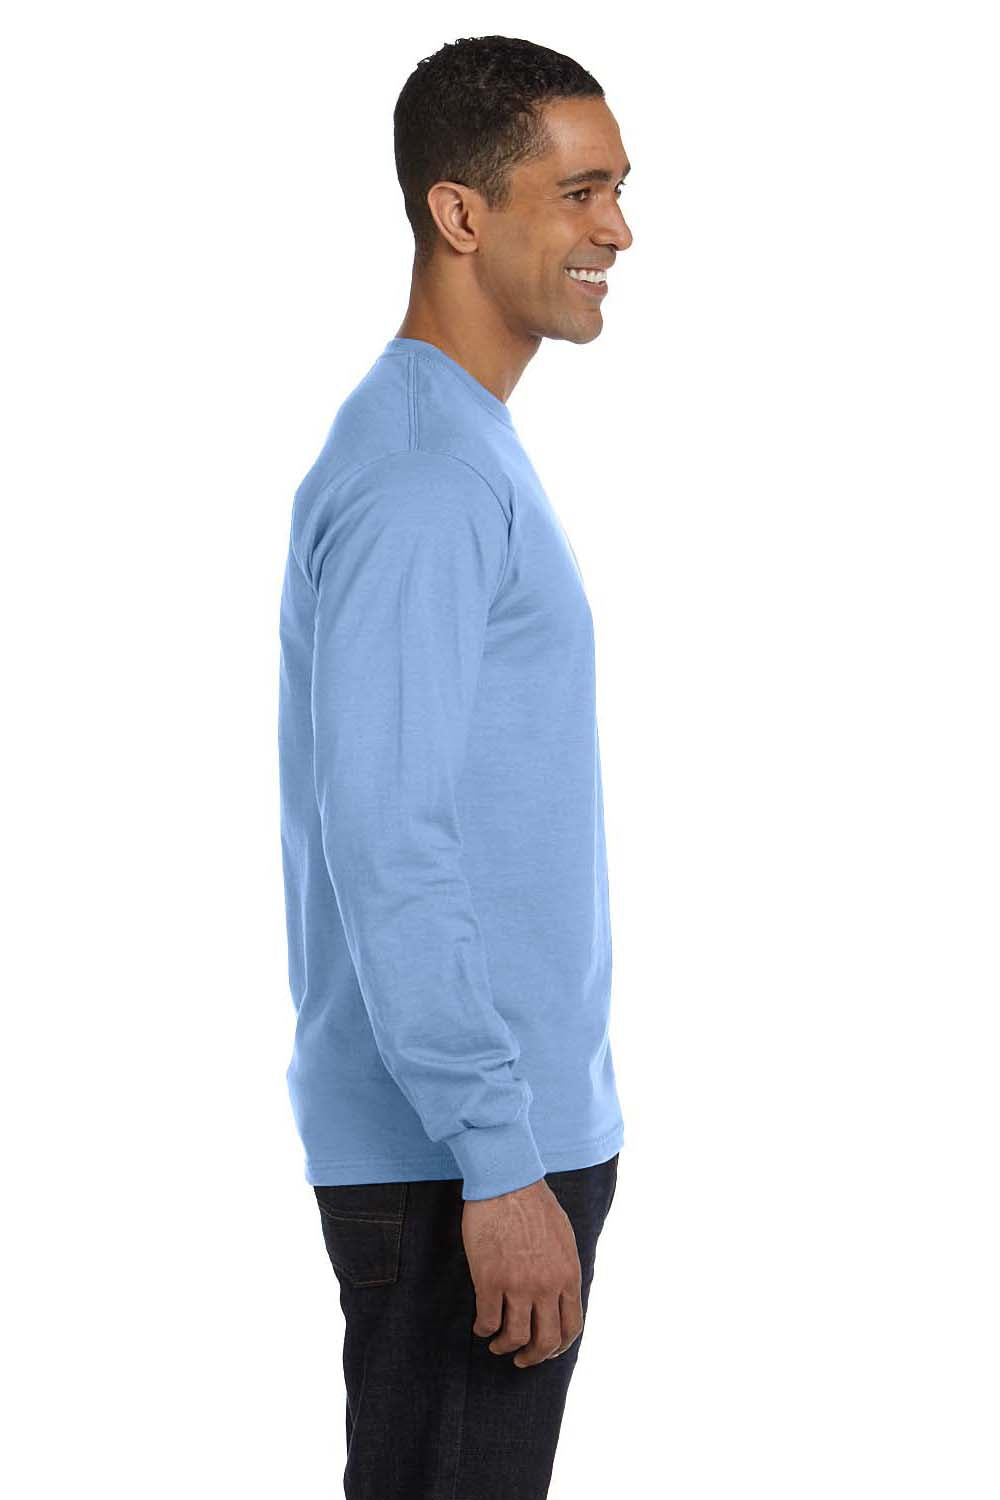 Hanes 5186 Mens Beefy-T Long Sleeve Crewneck T-Shirt Light Blue Side